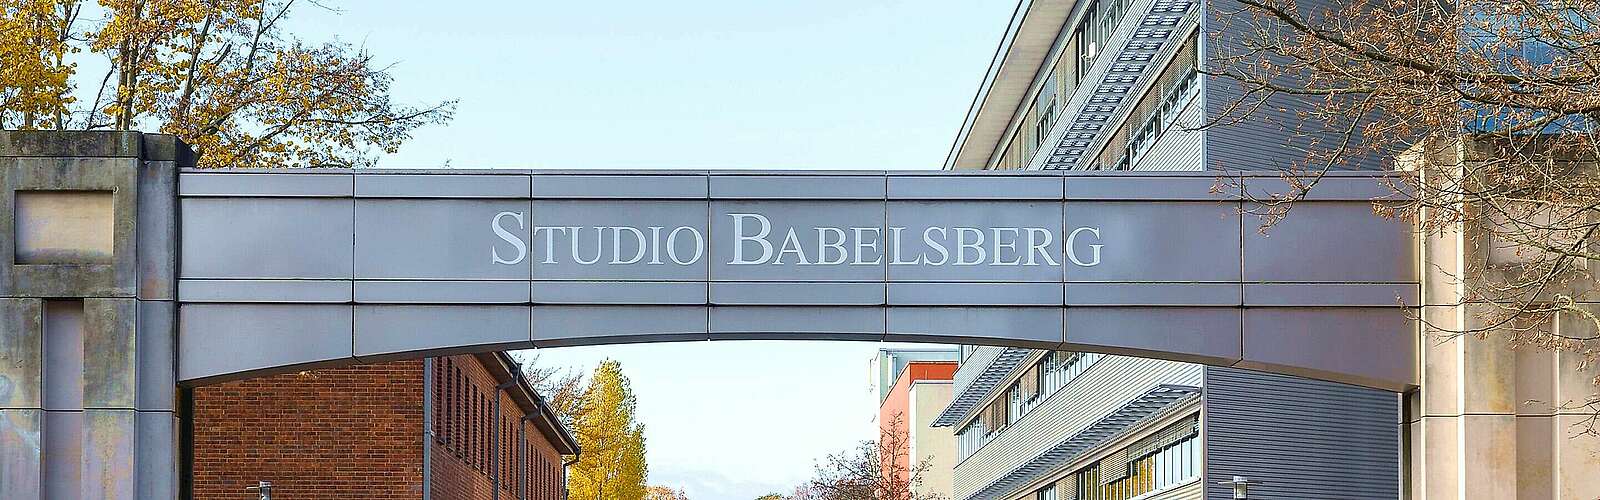 Eingangstor des Filmstudio Babelsberg,
        
    

        Foto: TMB Tourismus-Marketing Brandenburg GmbH/Yorck Maecke